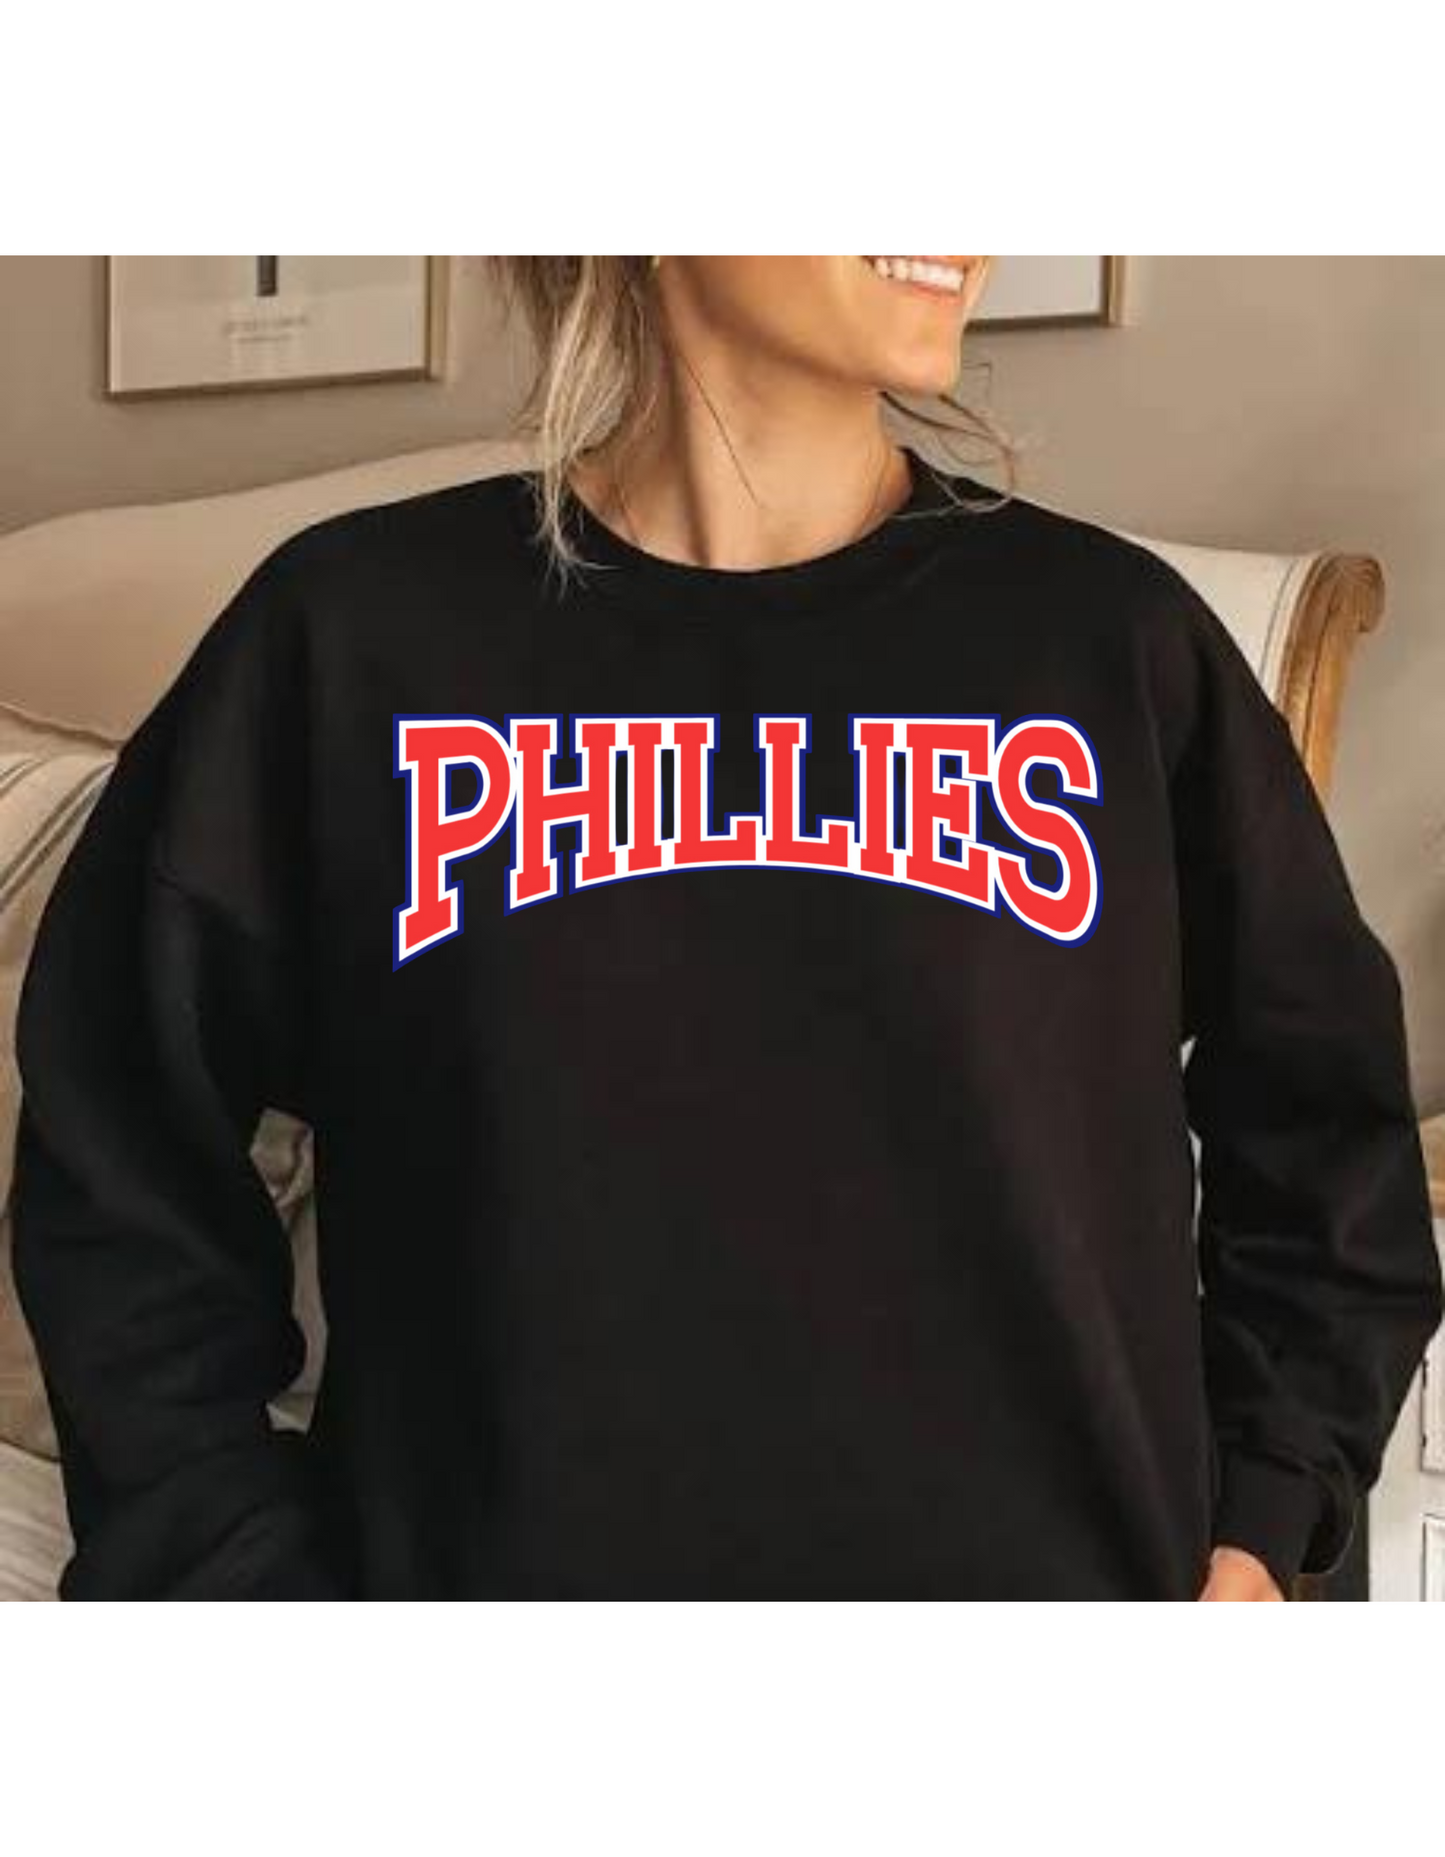 Philadelphia Phillies pullovers